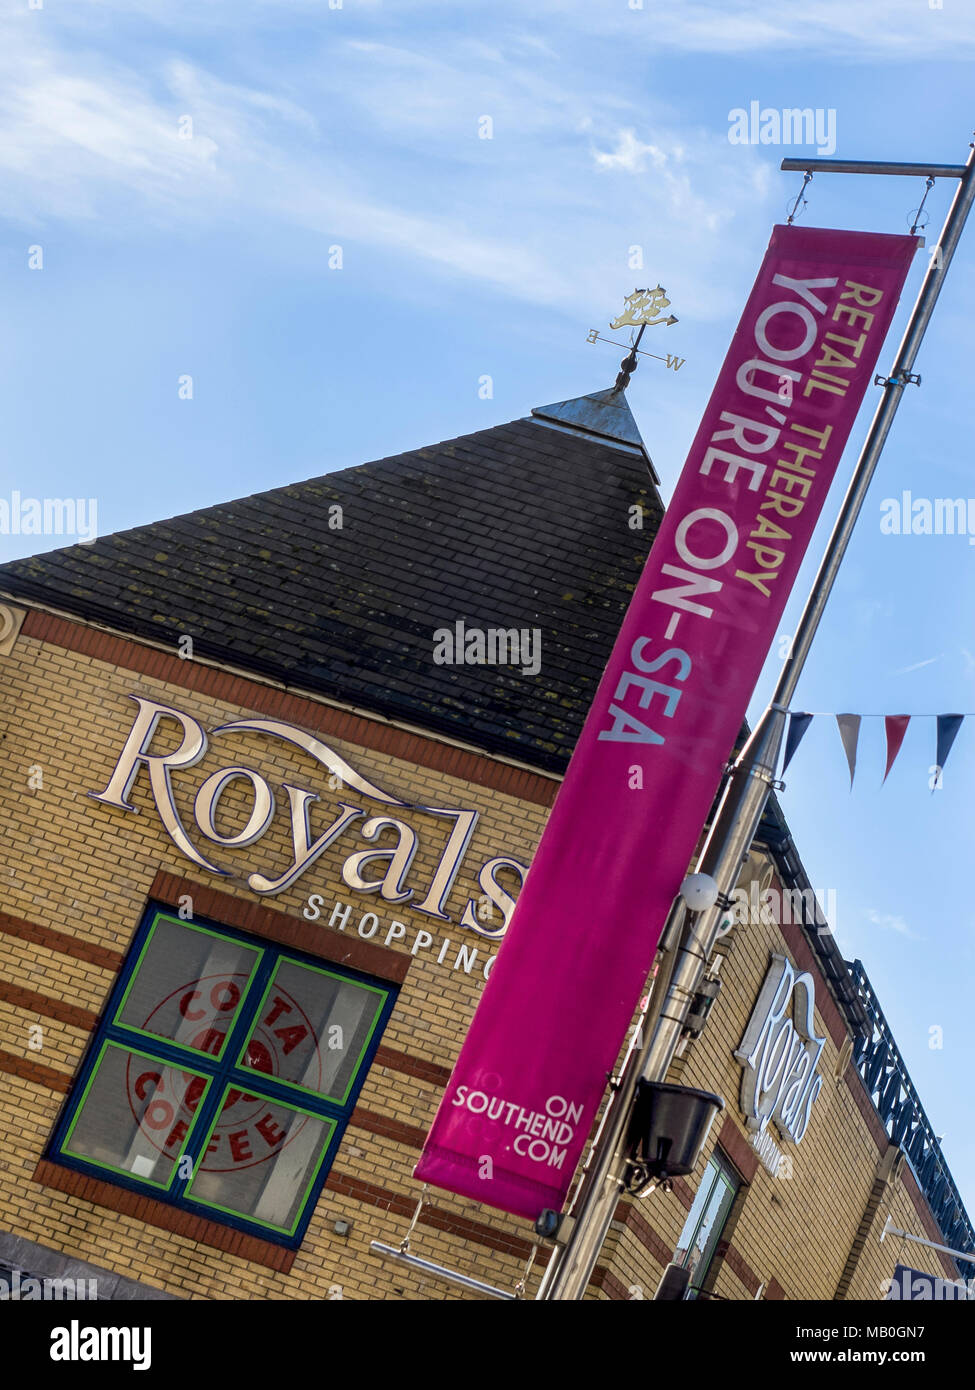 SOUTHEND-on-sea, Essex: Banner Förderung Retail Therapie in Southend außerhalb Royals Shopping Arcade Stockfoto